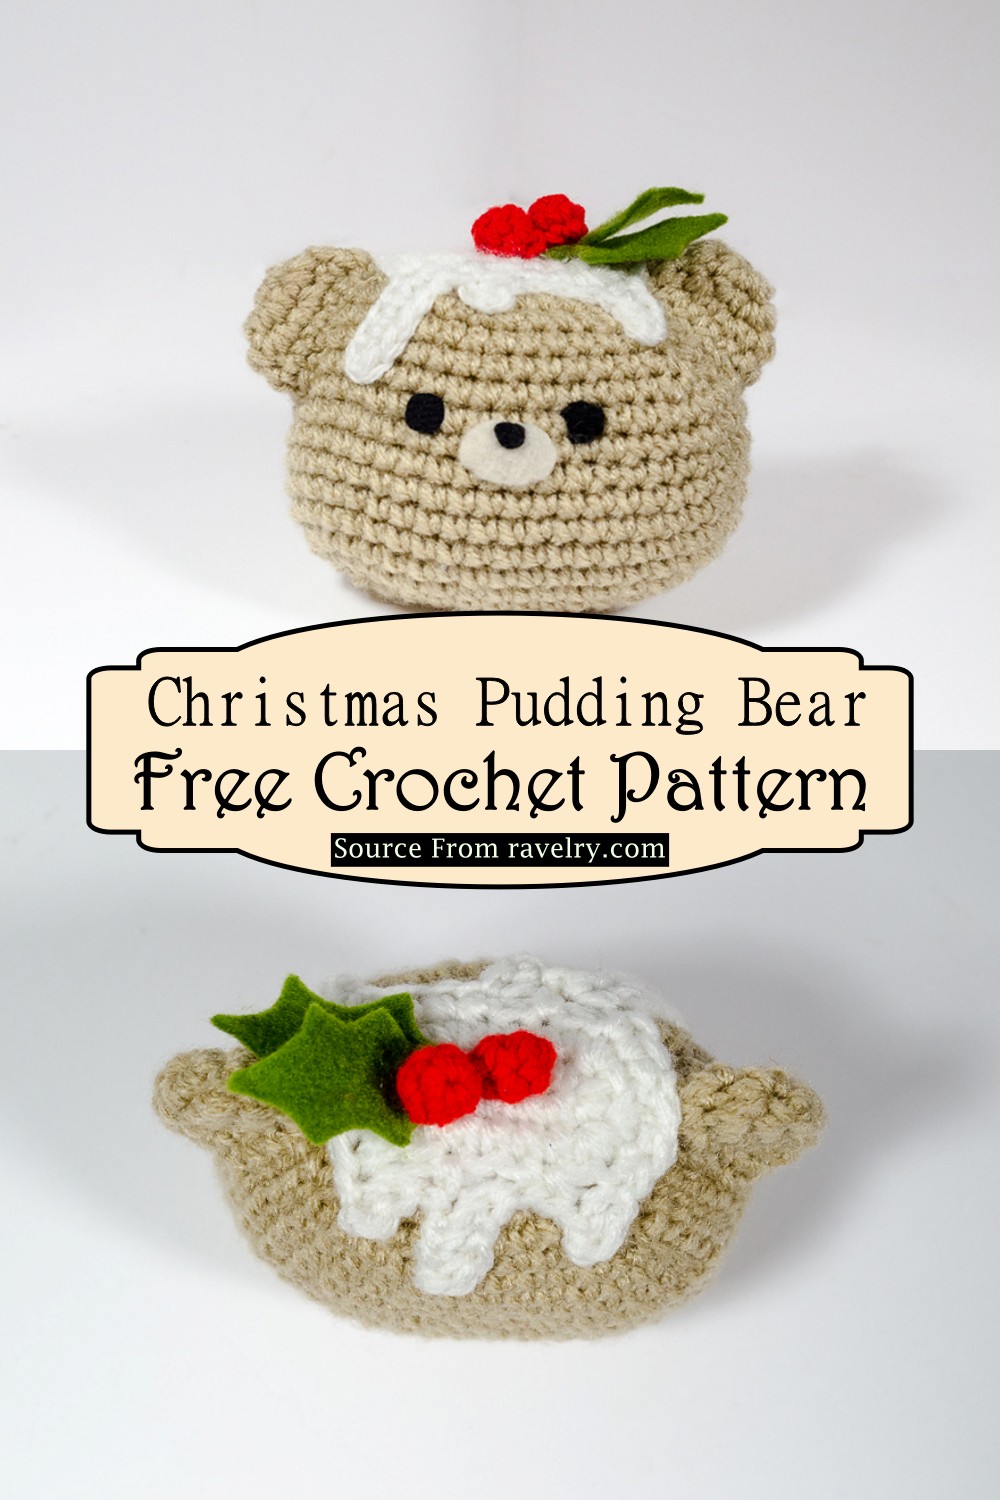 Crochet Christmas Pudding Bear Pattern